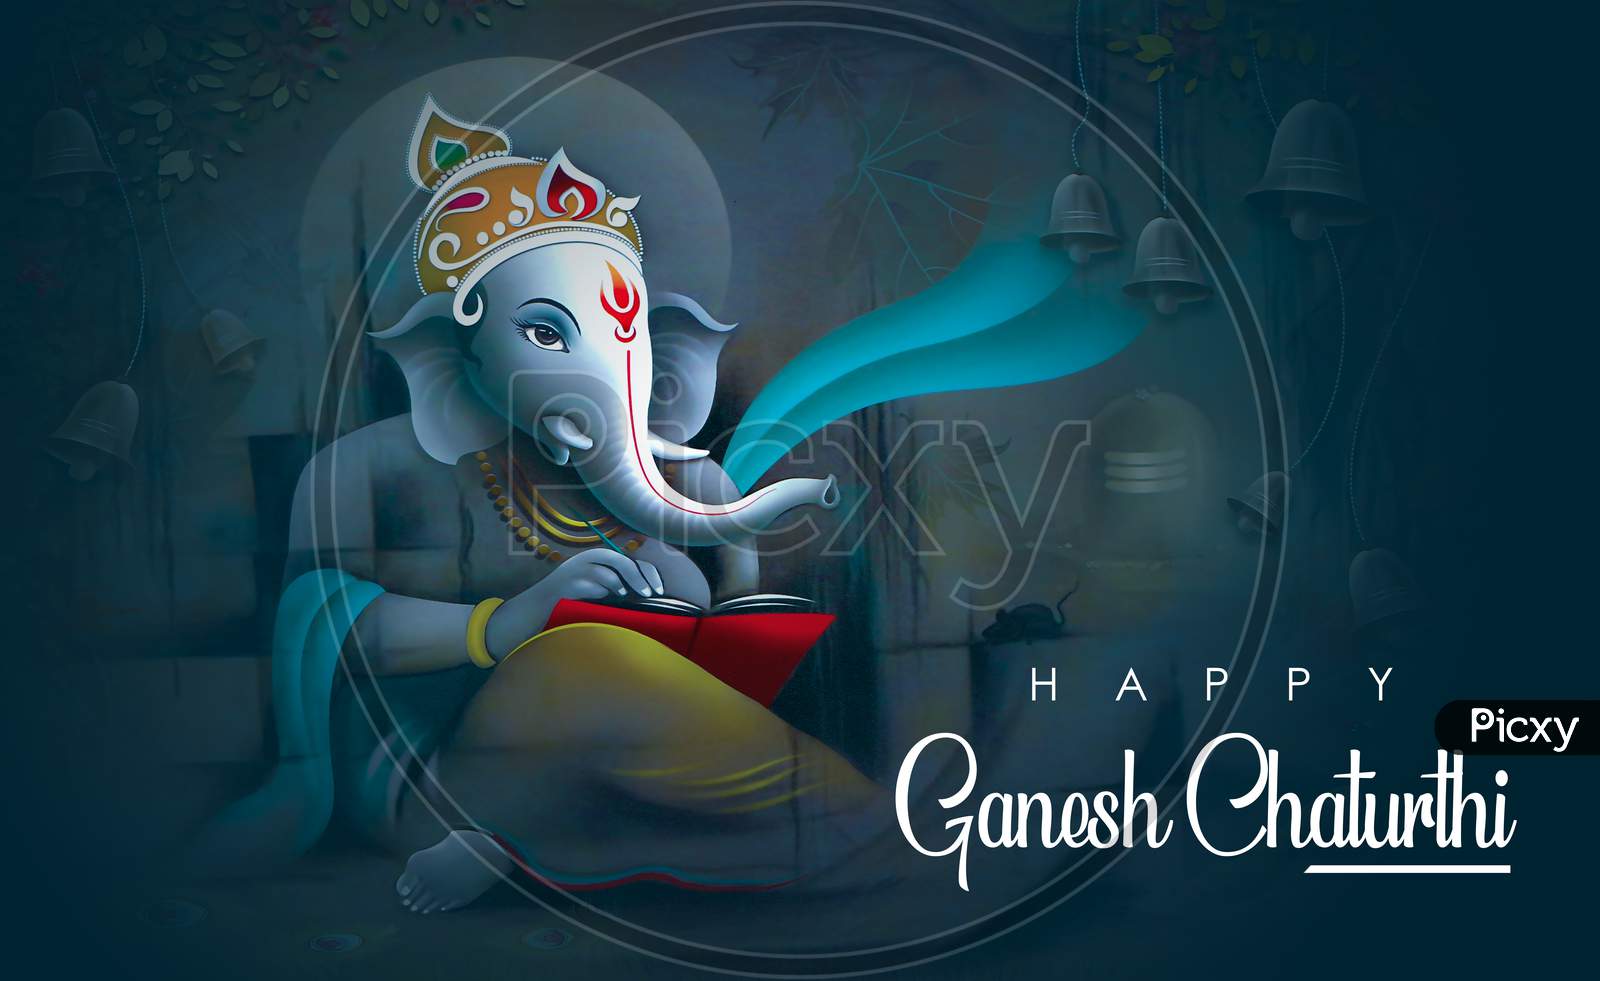 Creative Greeting Card,Poster Or Banner For Hindu Festival Ganesh Chaturthi Celebration Or Shubh Deepawali